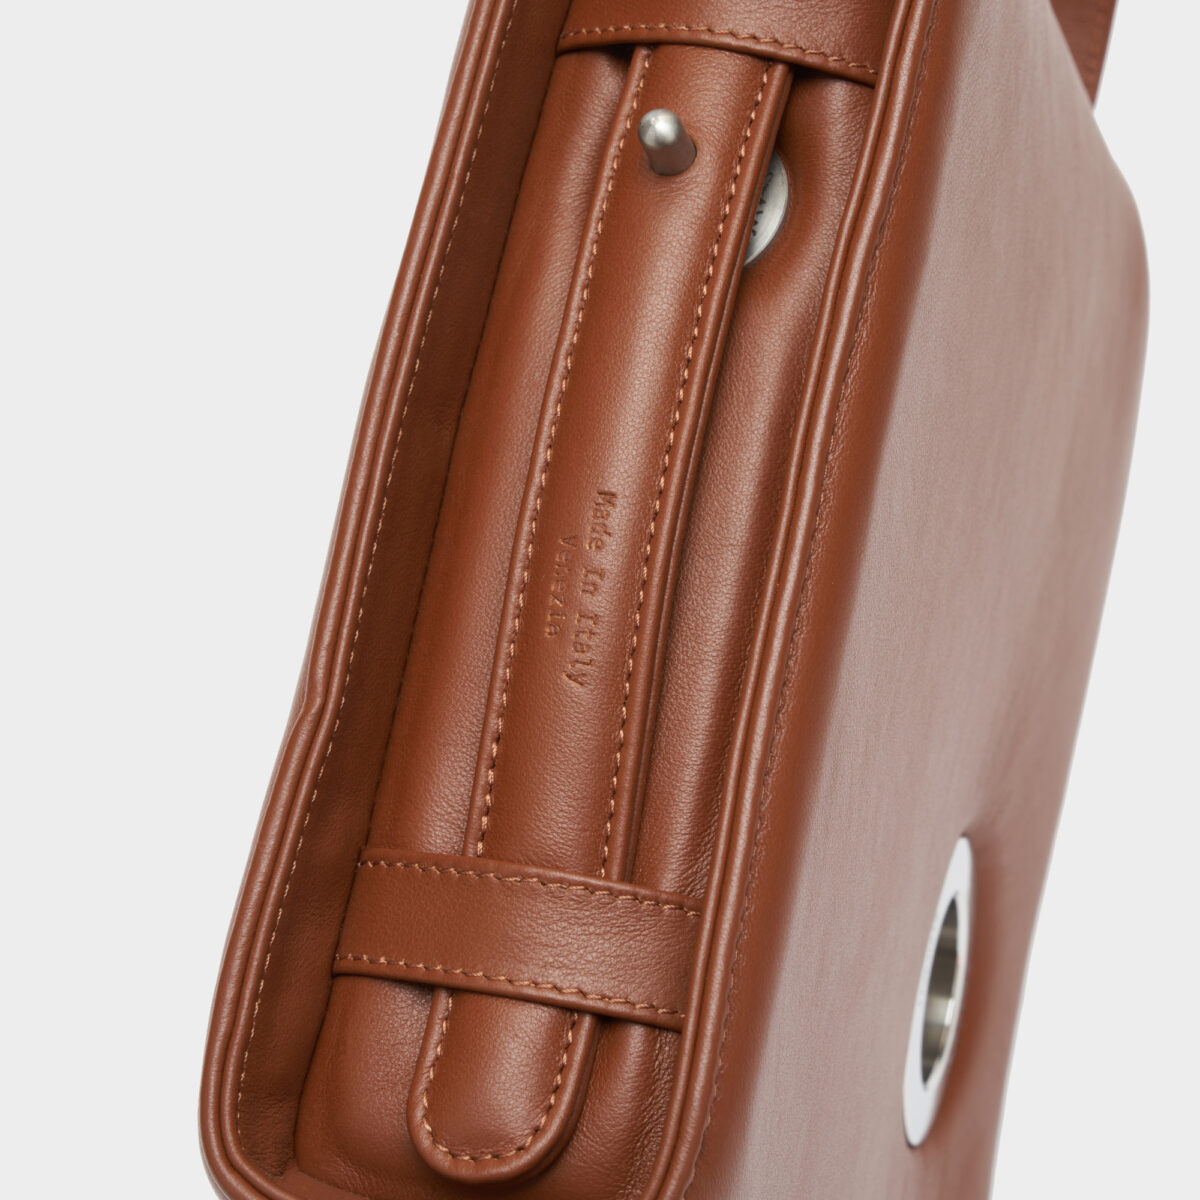 p11-leather-bag_stander-indossato1